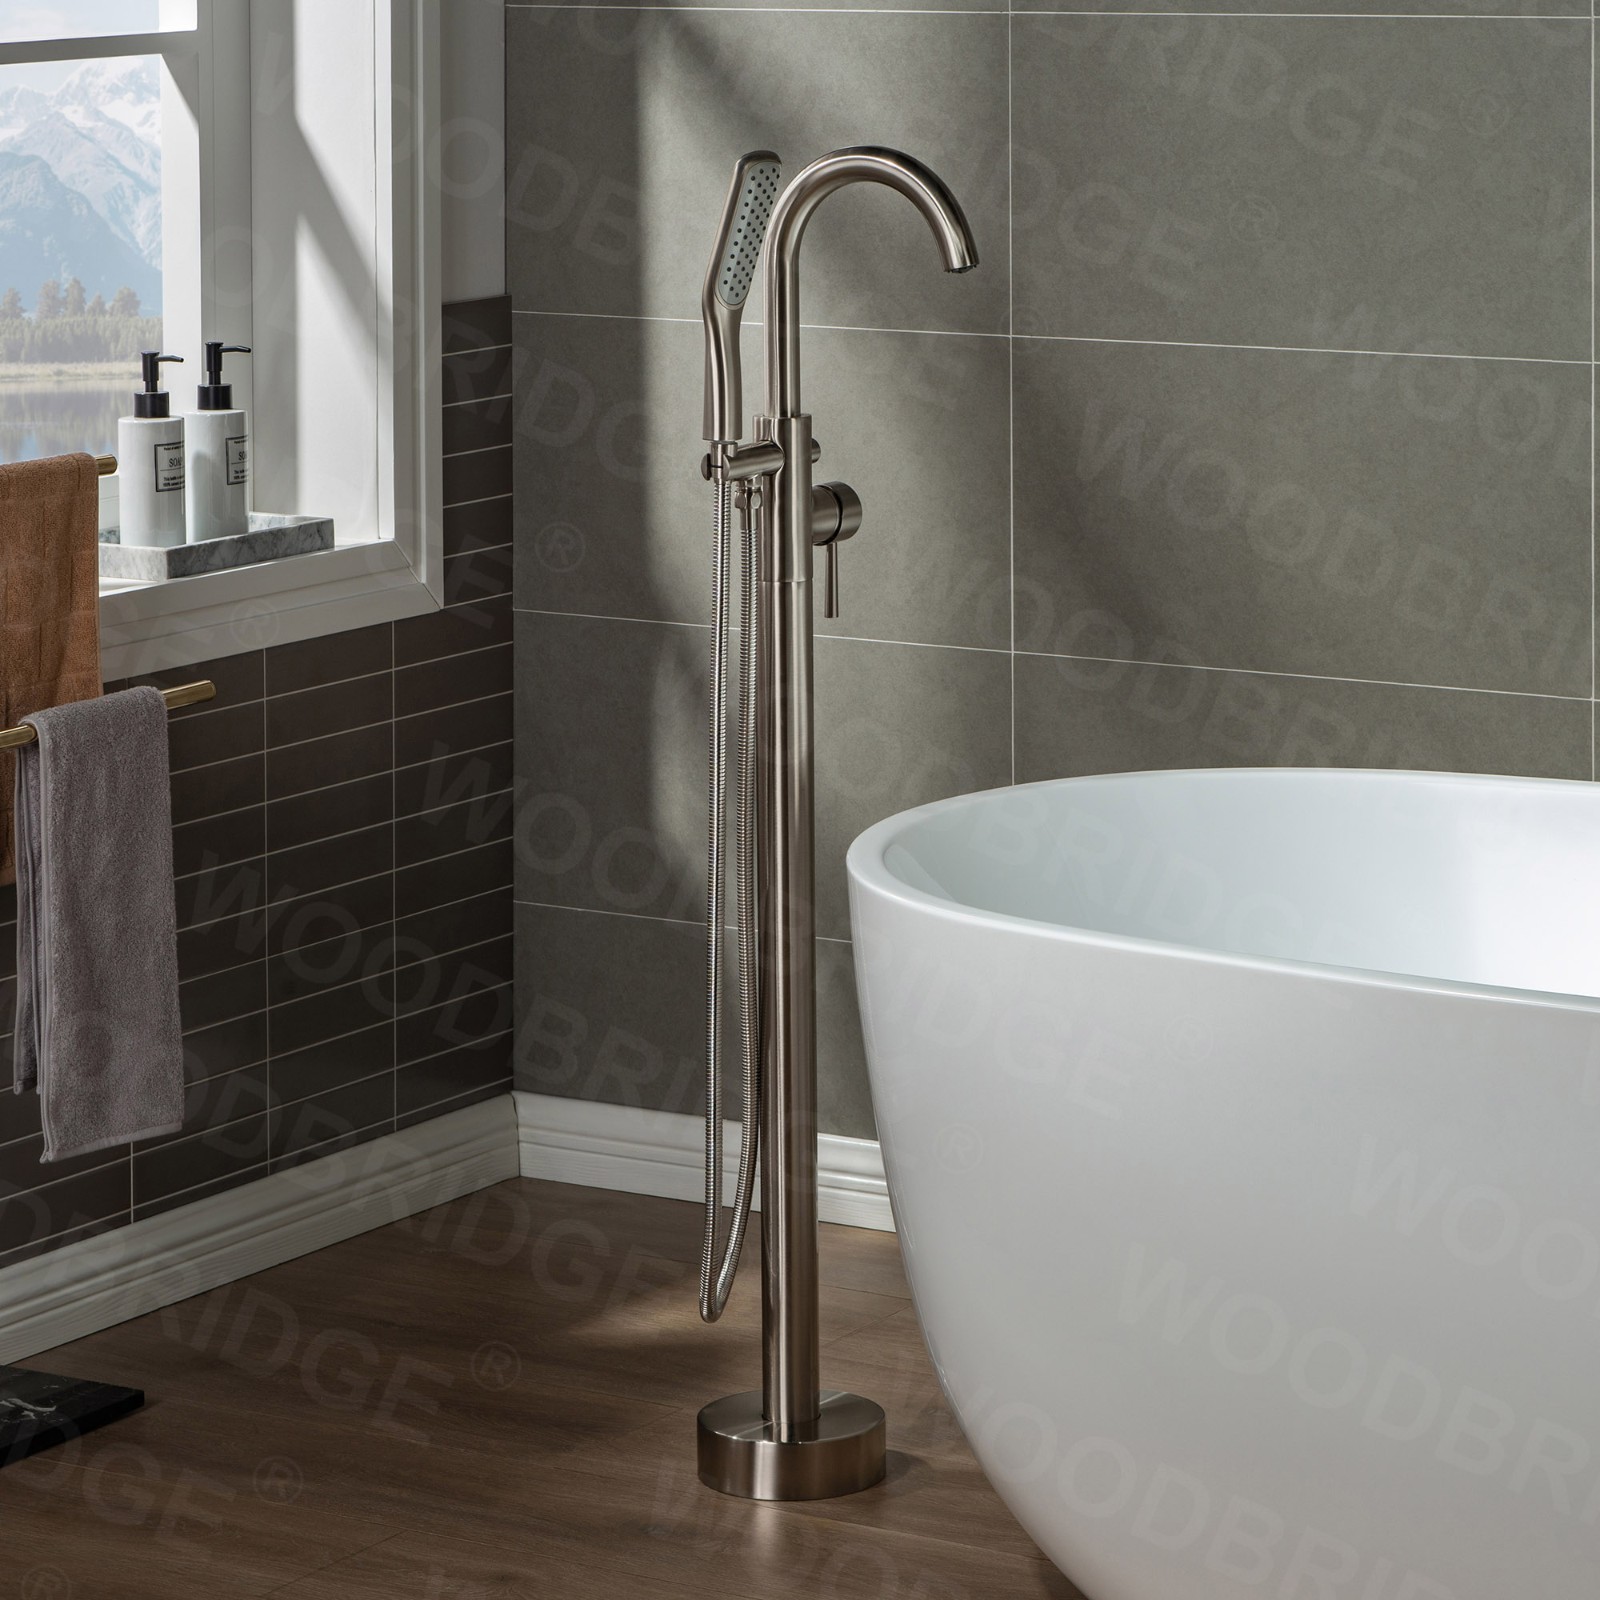  WOODBRIDGE WOODBRIDGEE Contemporary Single Handle Floor Mount Freestanding Tub Filler Faucet with Hand Shower in (Brushed Nickel) Finish,F0001BNSQ_7875